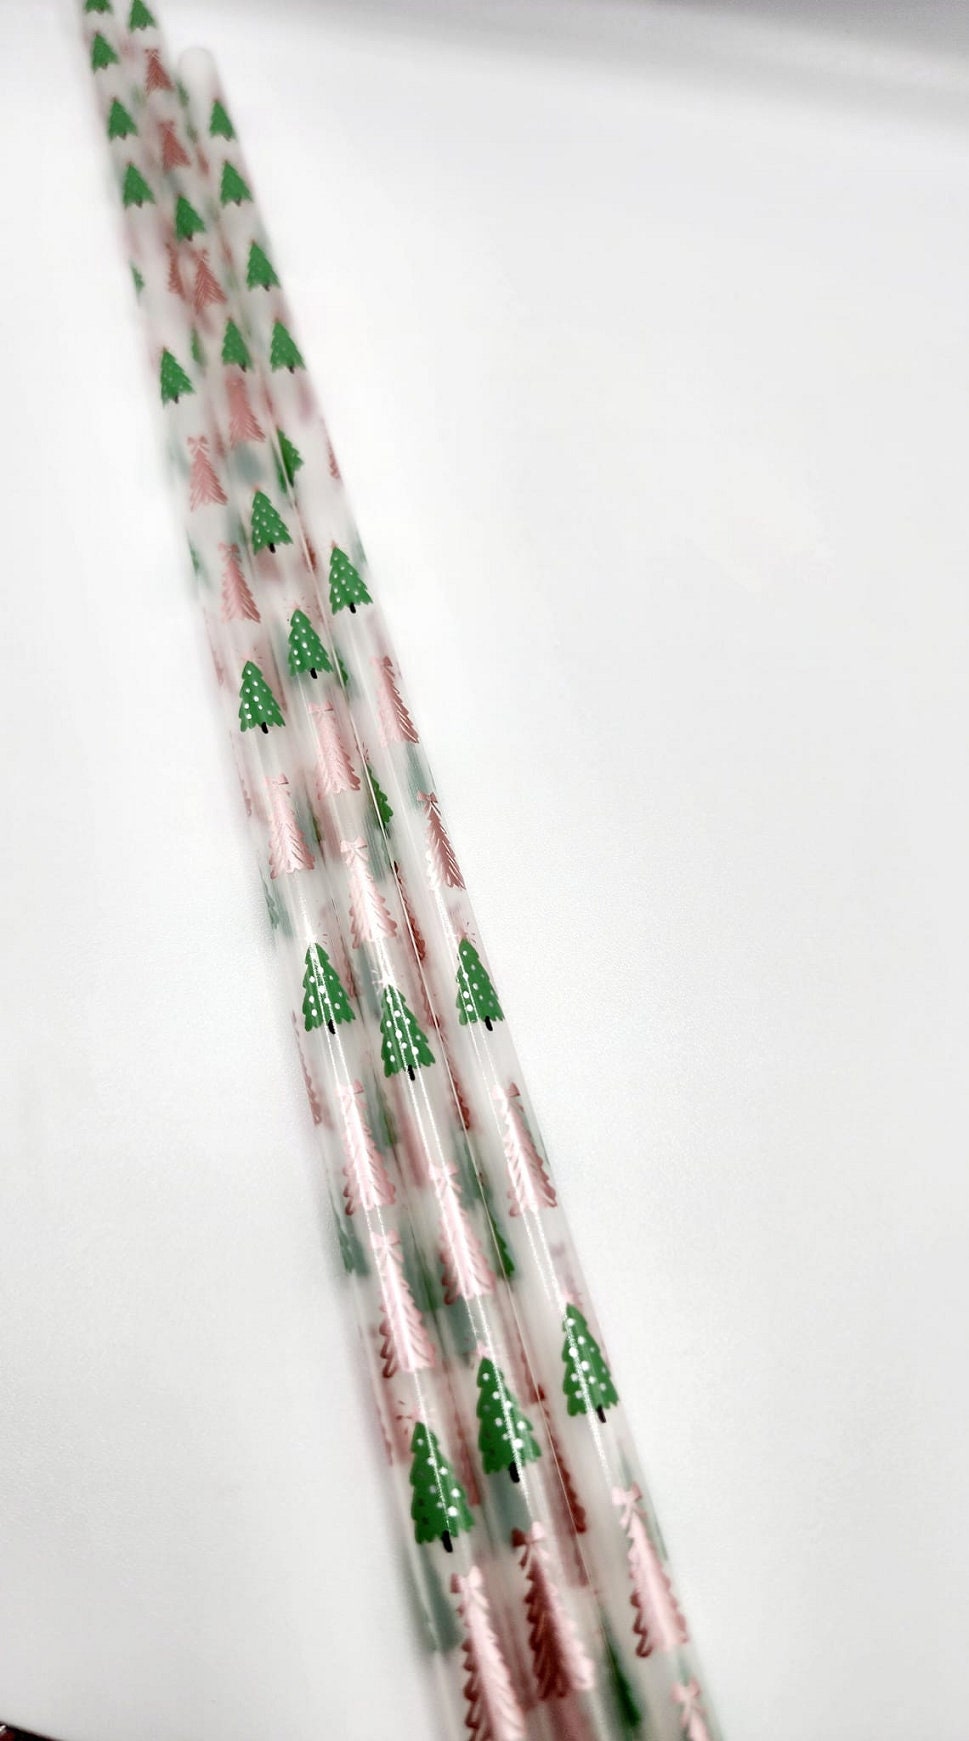 4-PACK: 40oz Christmas Straws, 40oz Replacement Straws, 40oz Straws, 30oz  Straws, Stocking Straws, Candy Cane Straws, Christmas Tree Straws 